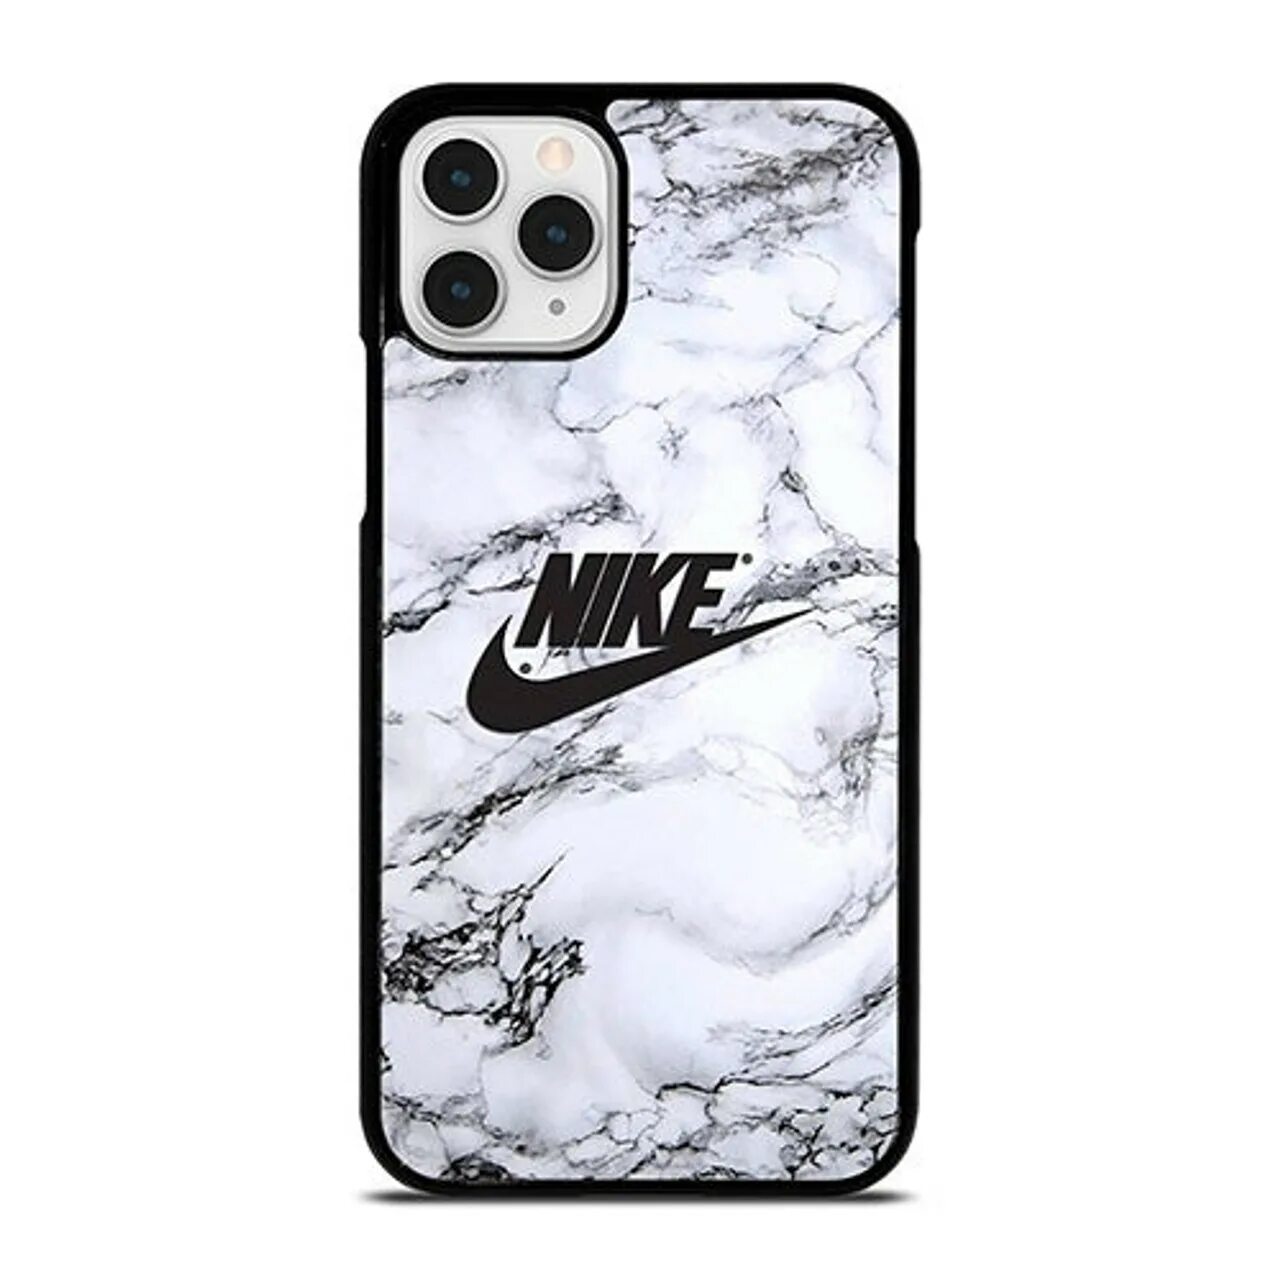 Чехлы на телефон про макс. Чехол на айфон 11 Nike Air. Чехол найк на айфон 11. 11 Iphone chehol Nike. Nike iphone 11 Case.